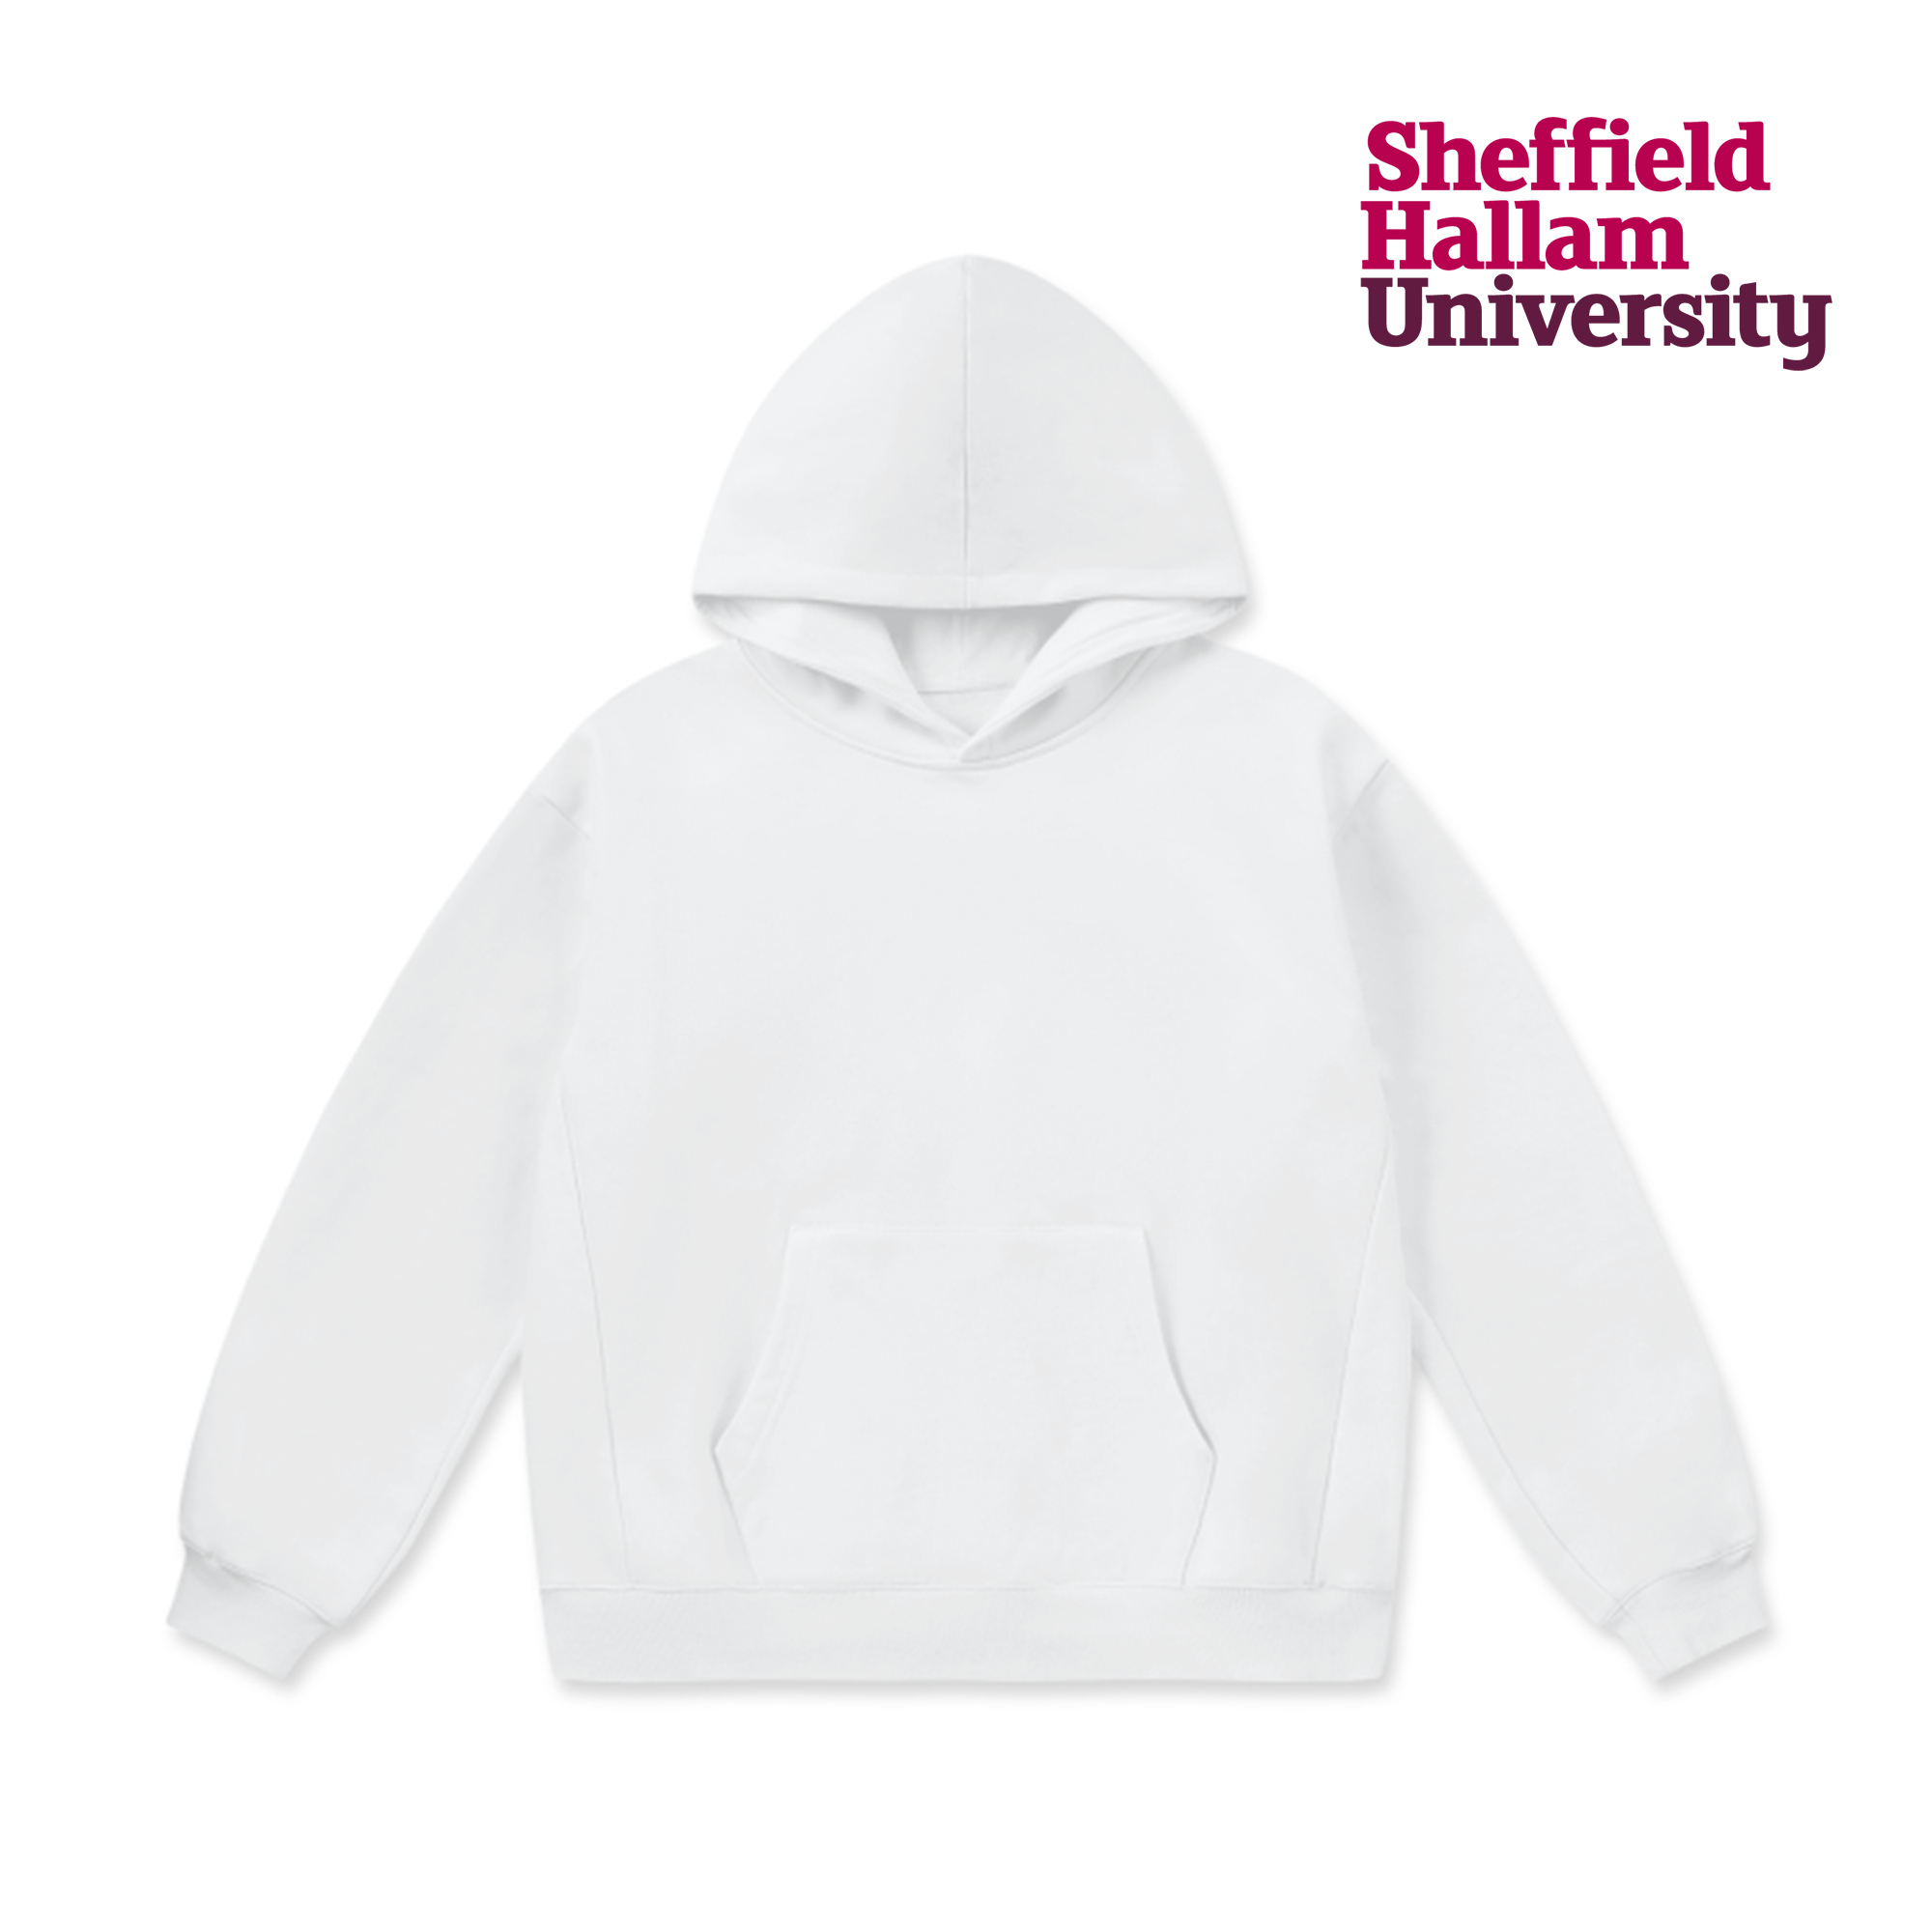 LCC Super Weighted Hoodie - Sheffield Hallam University (Modern)